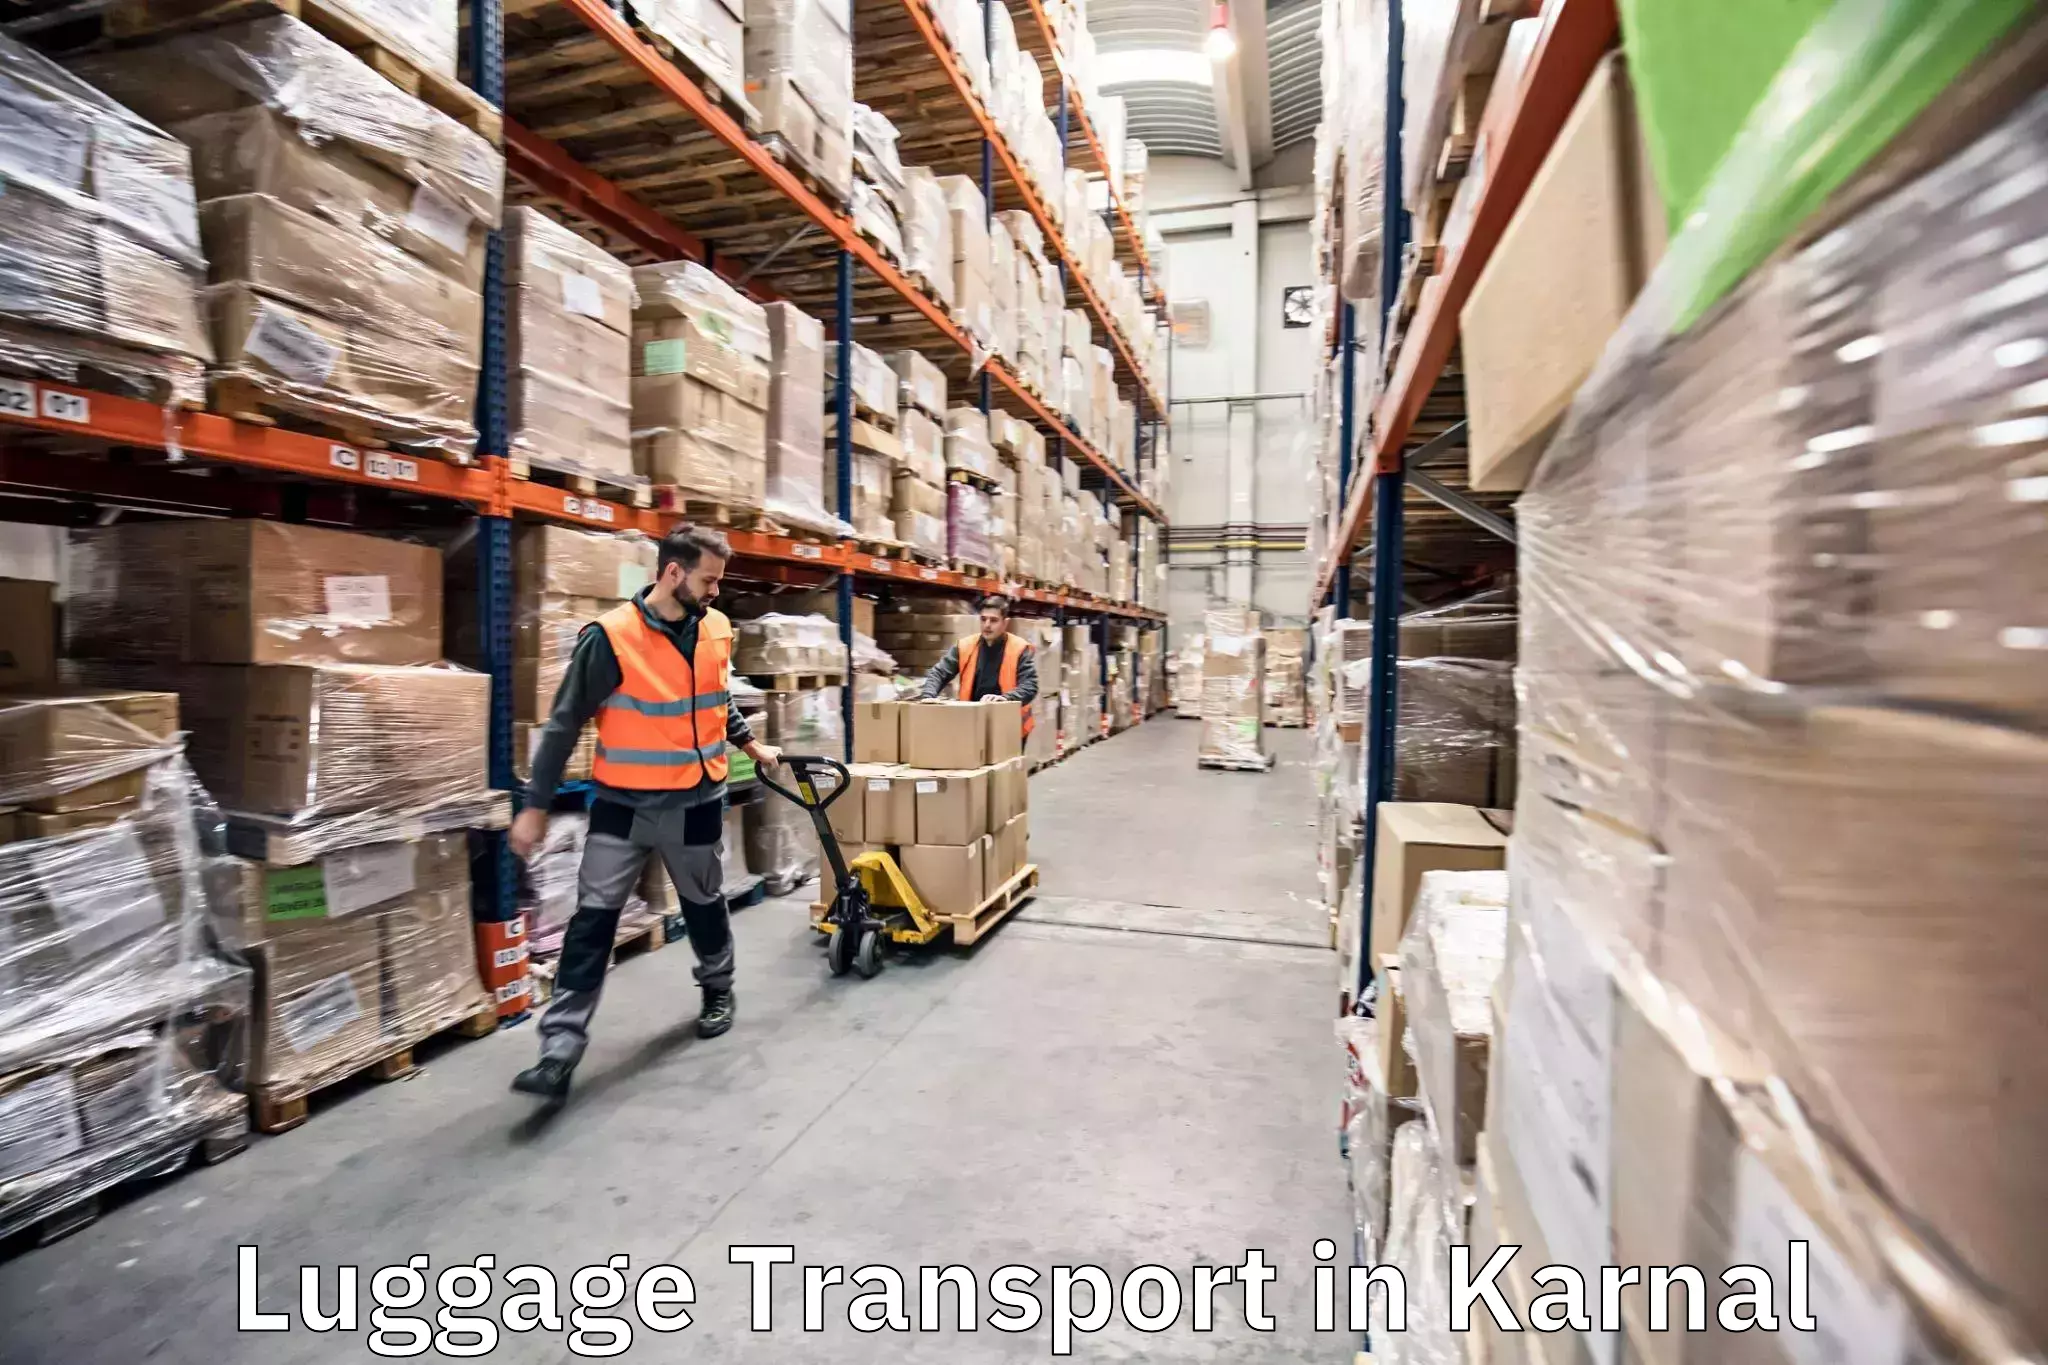 Luggage transport deals in Karnal